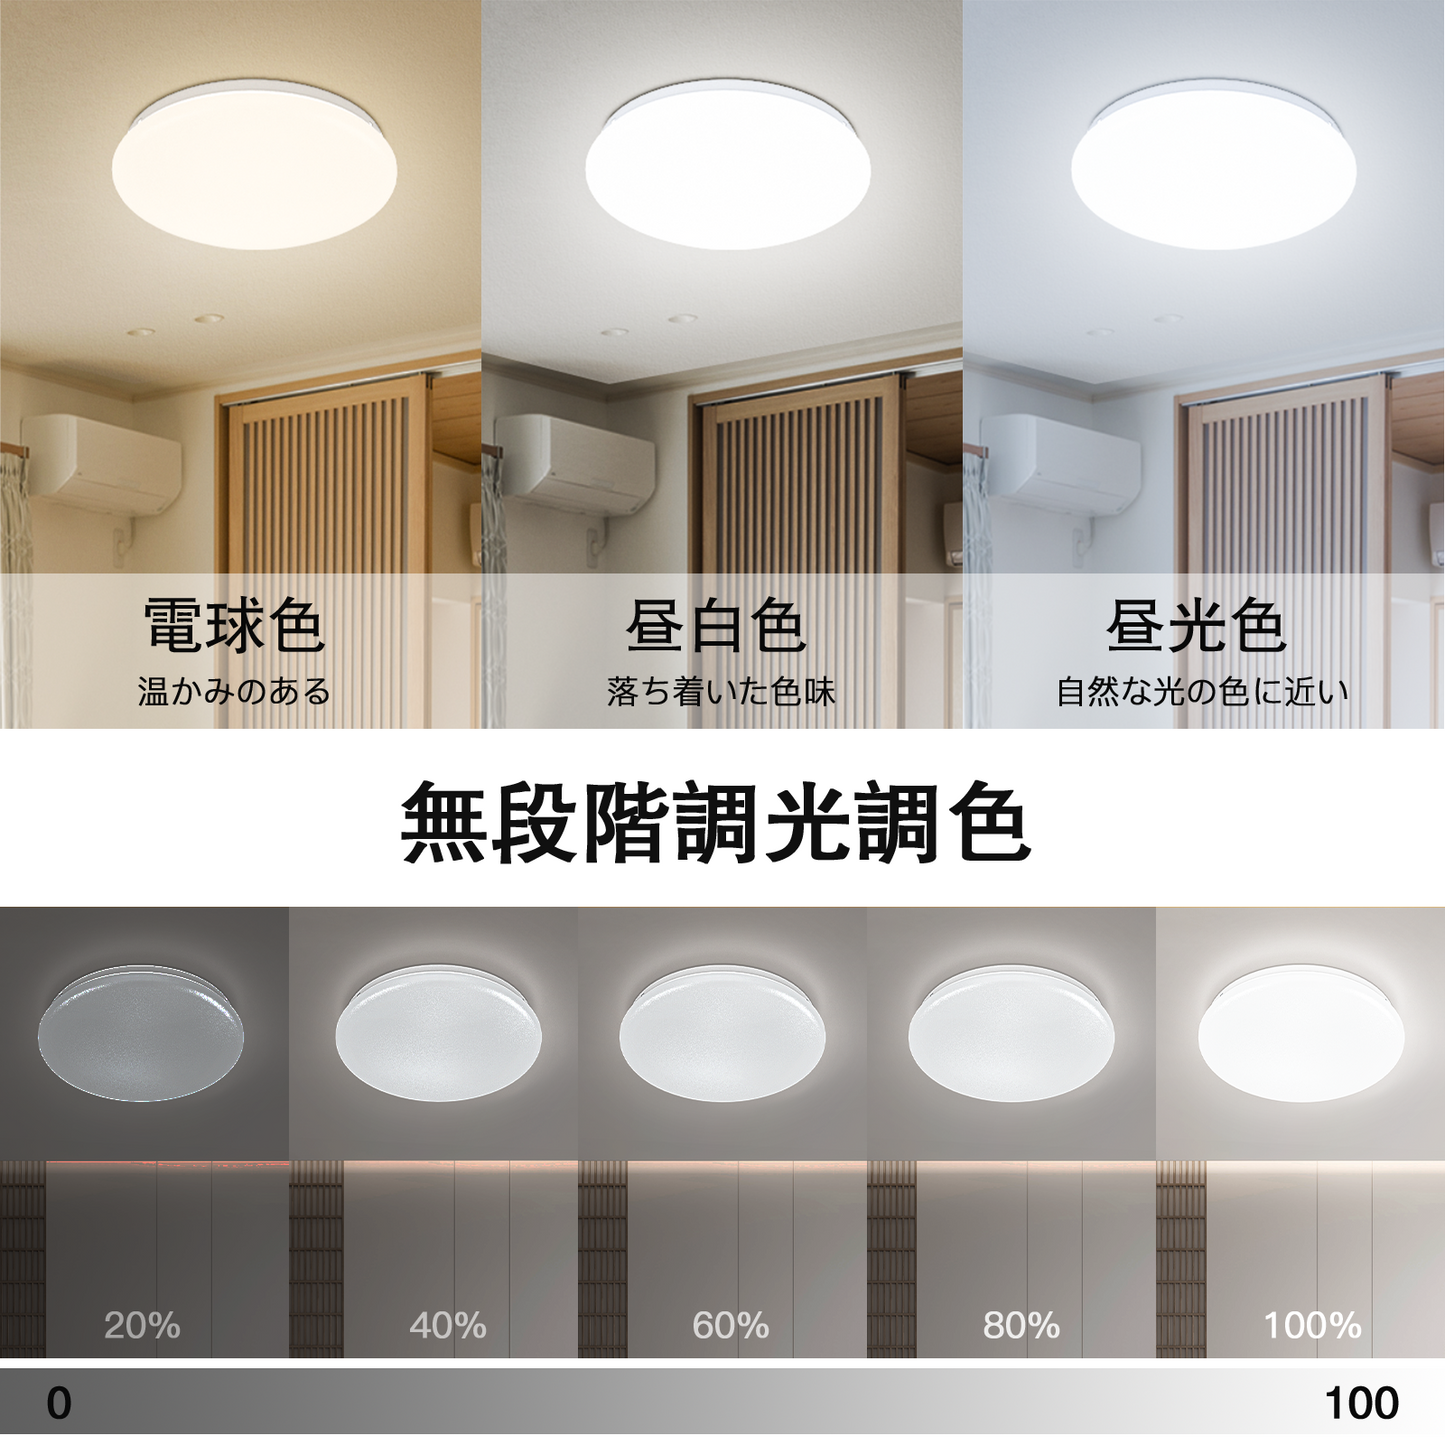 MOONPAI LEDシーリングライト 8畳 3600lm 直径33CM 調光 調色 リモコン付き 常夜灯 メモリー機能 15/30/60分タイマー 照明器具 天井照明 室内照明 寝室 リビング